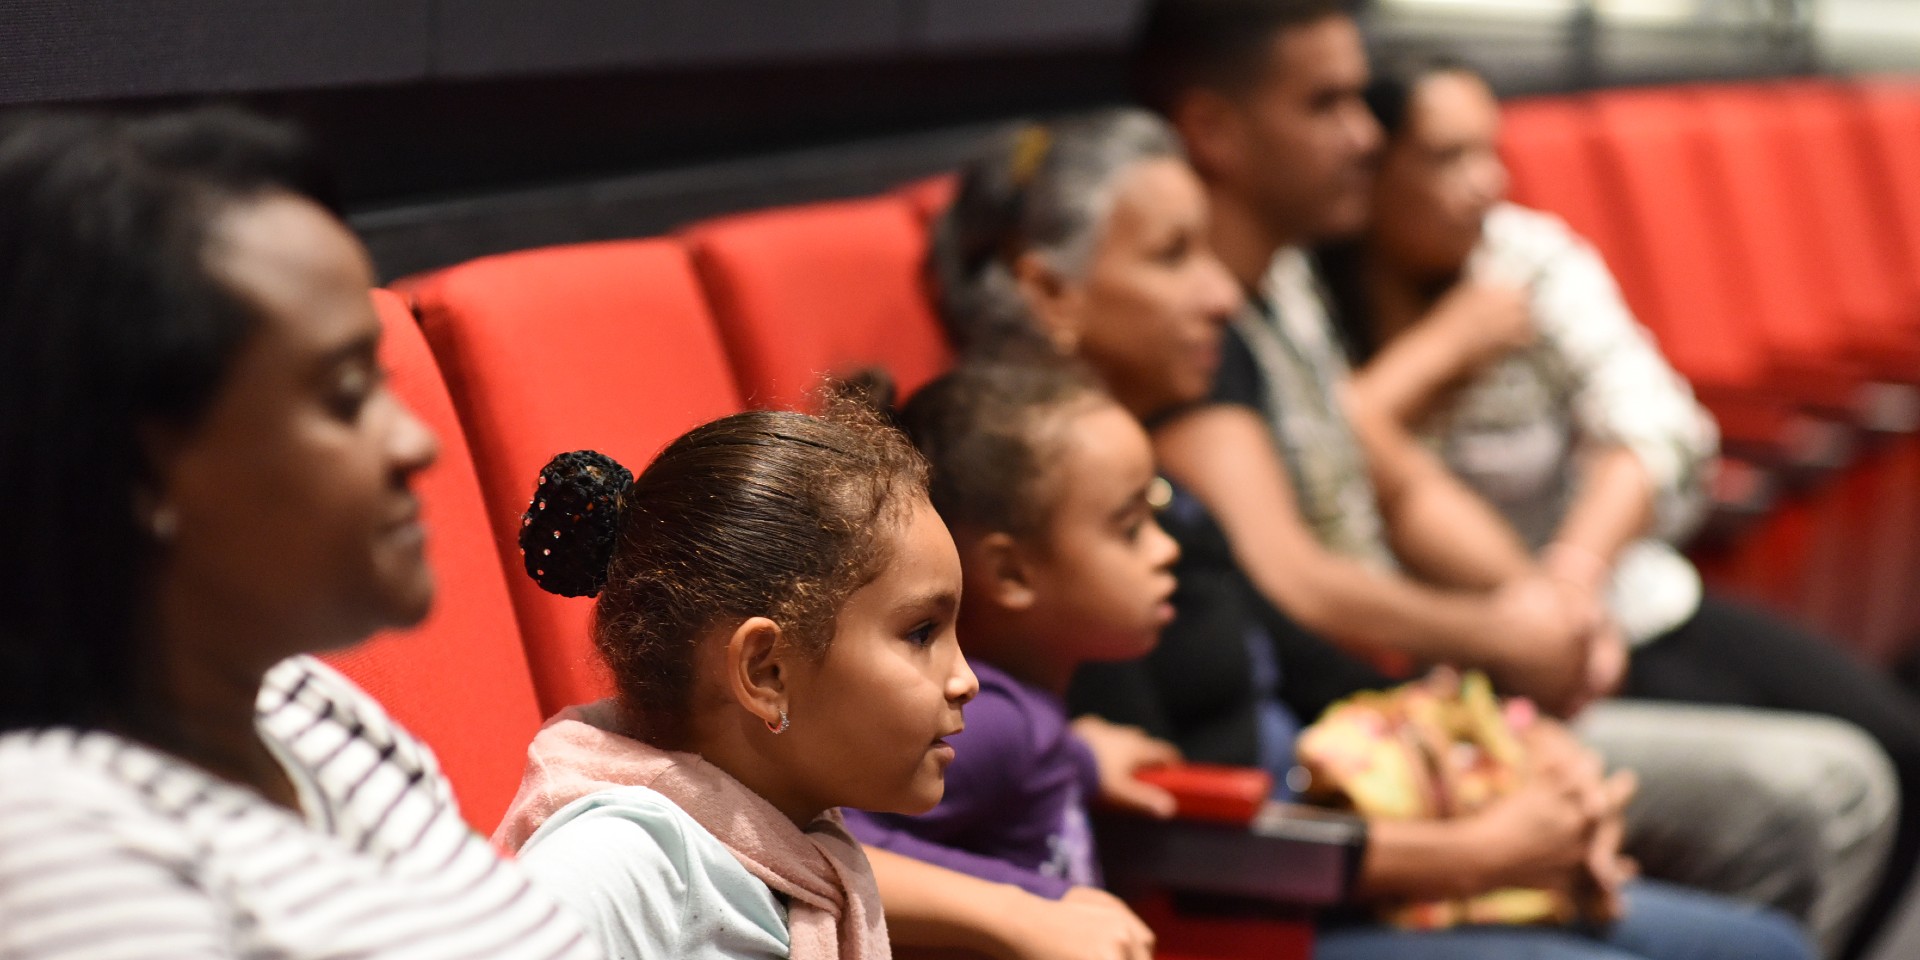 Children sitting in Lenfest theater. Photo Credit: Diane Bondareff